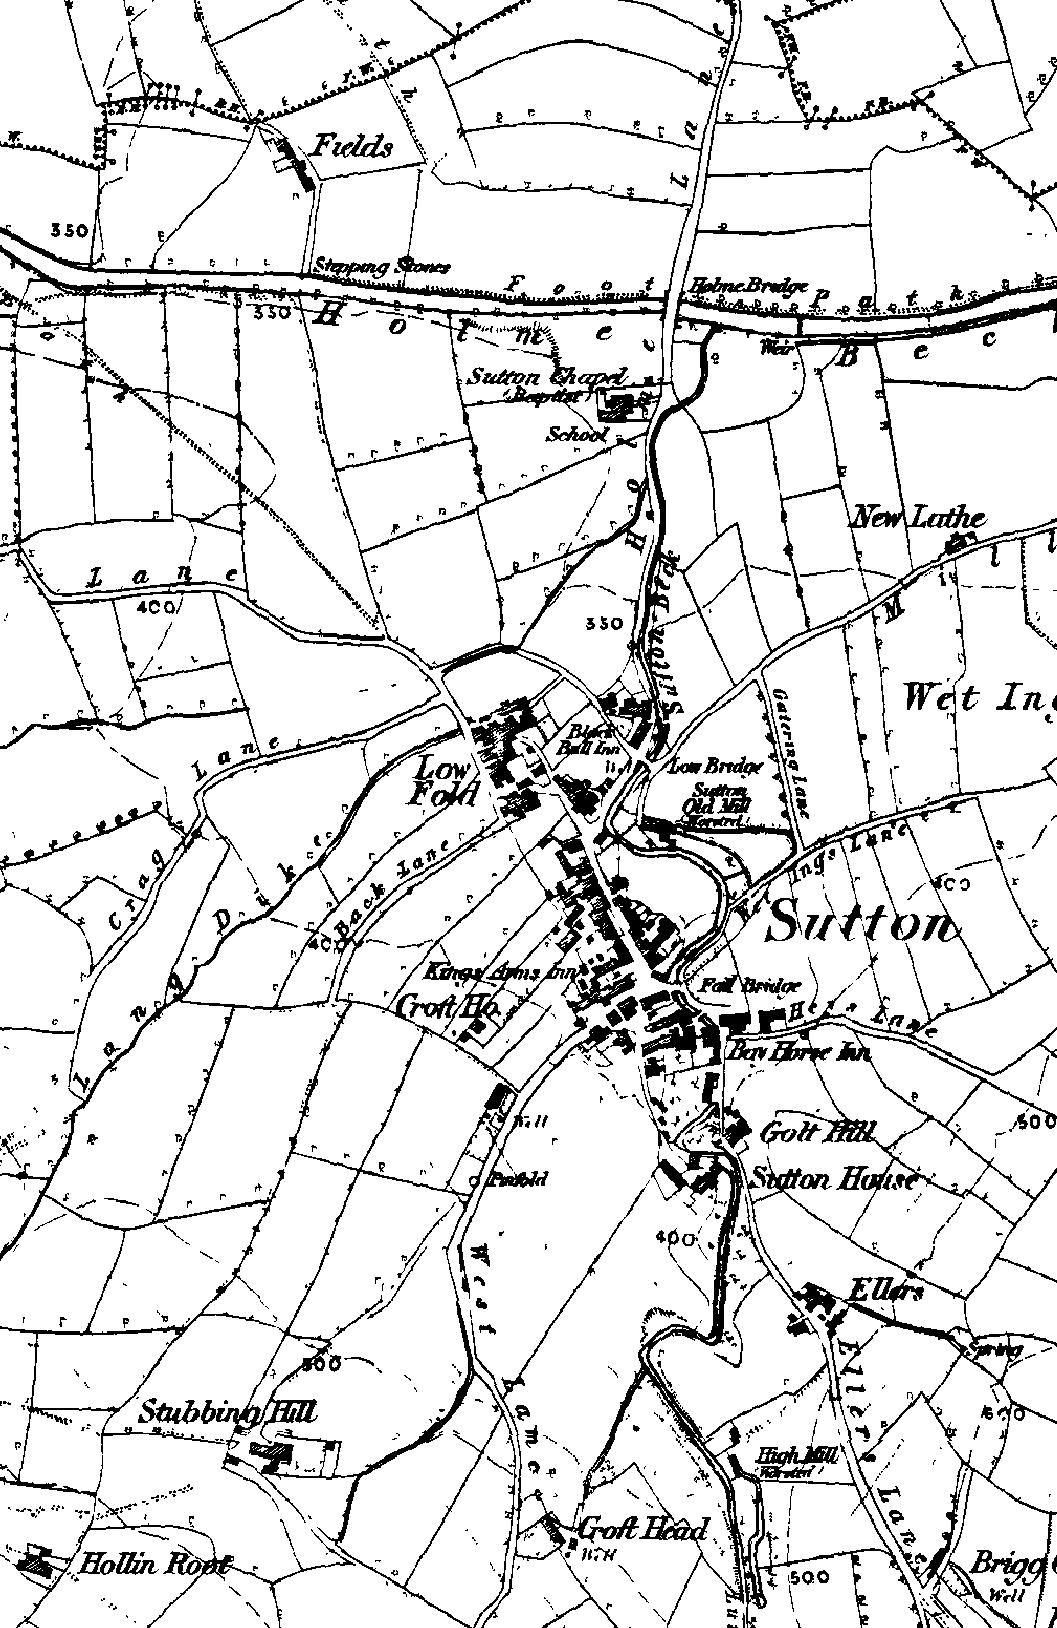 1850 OS map